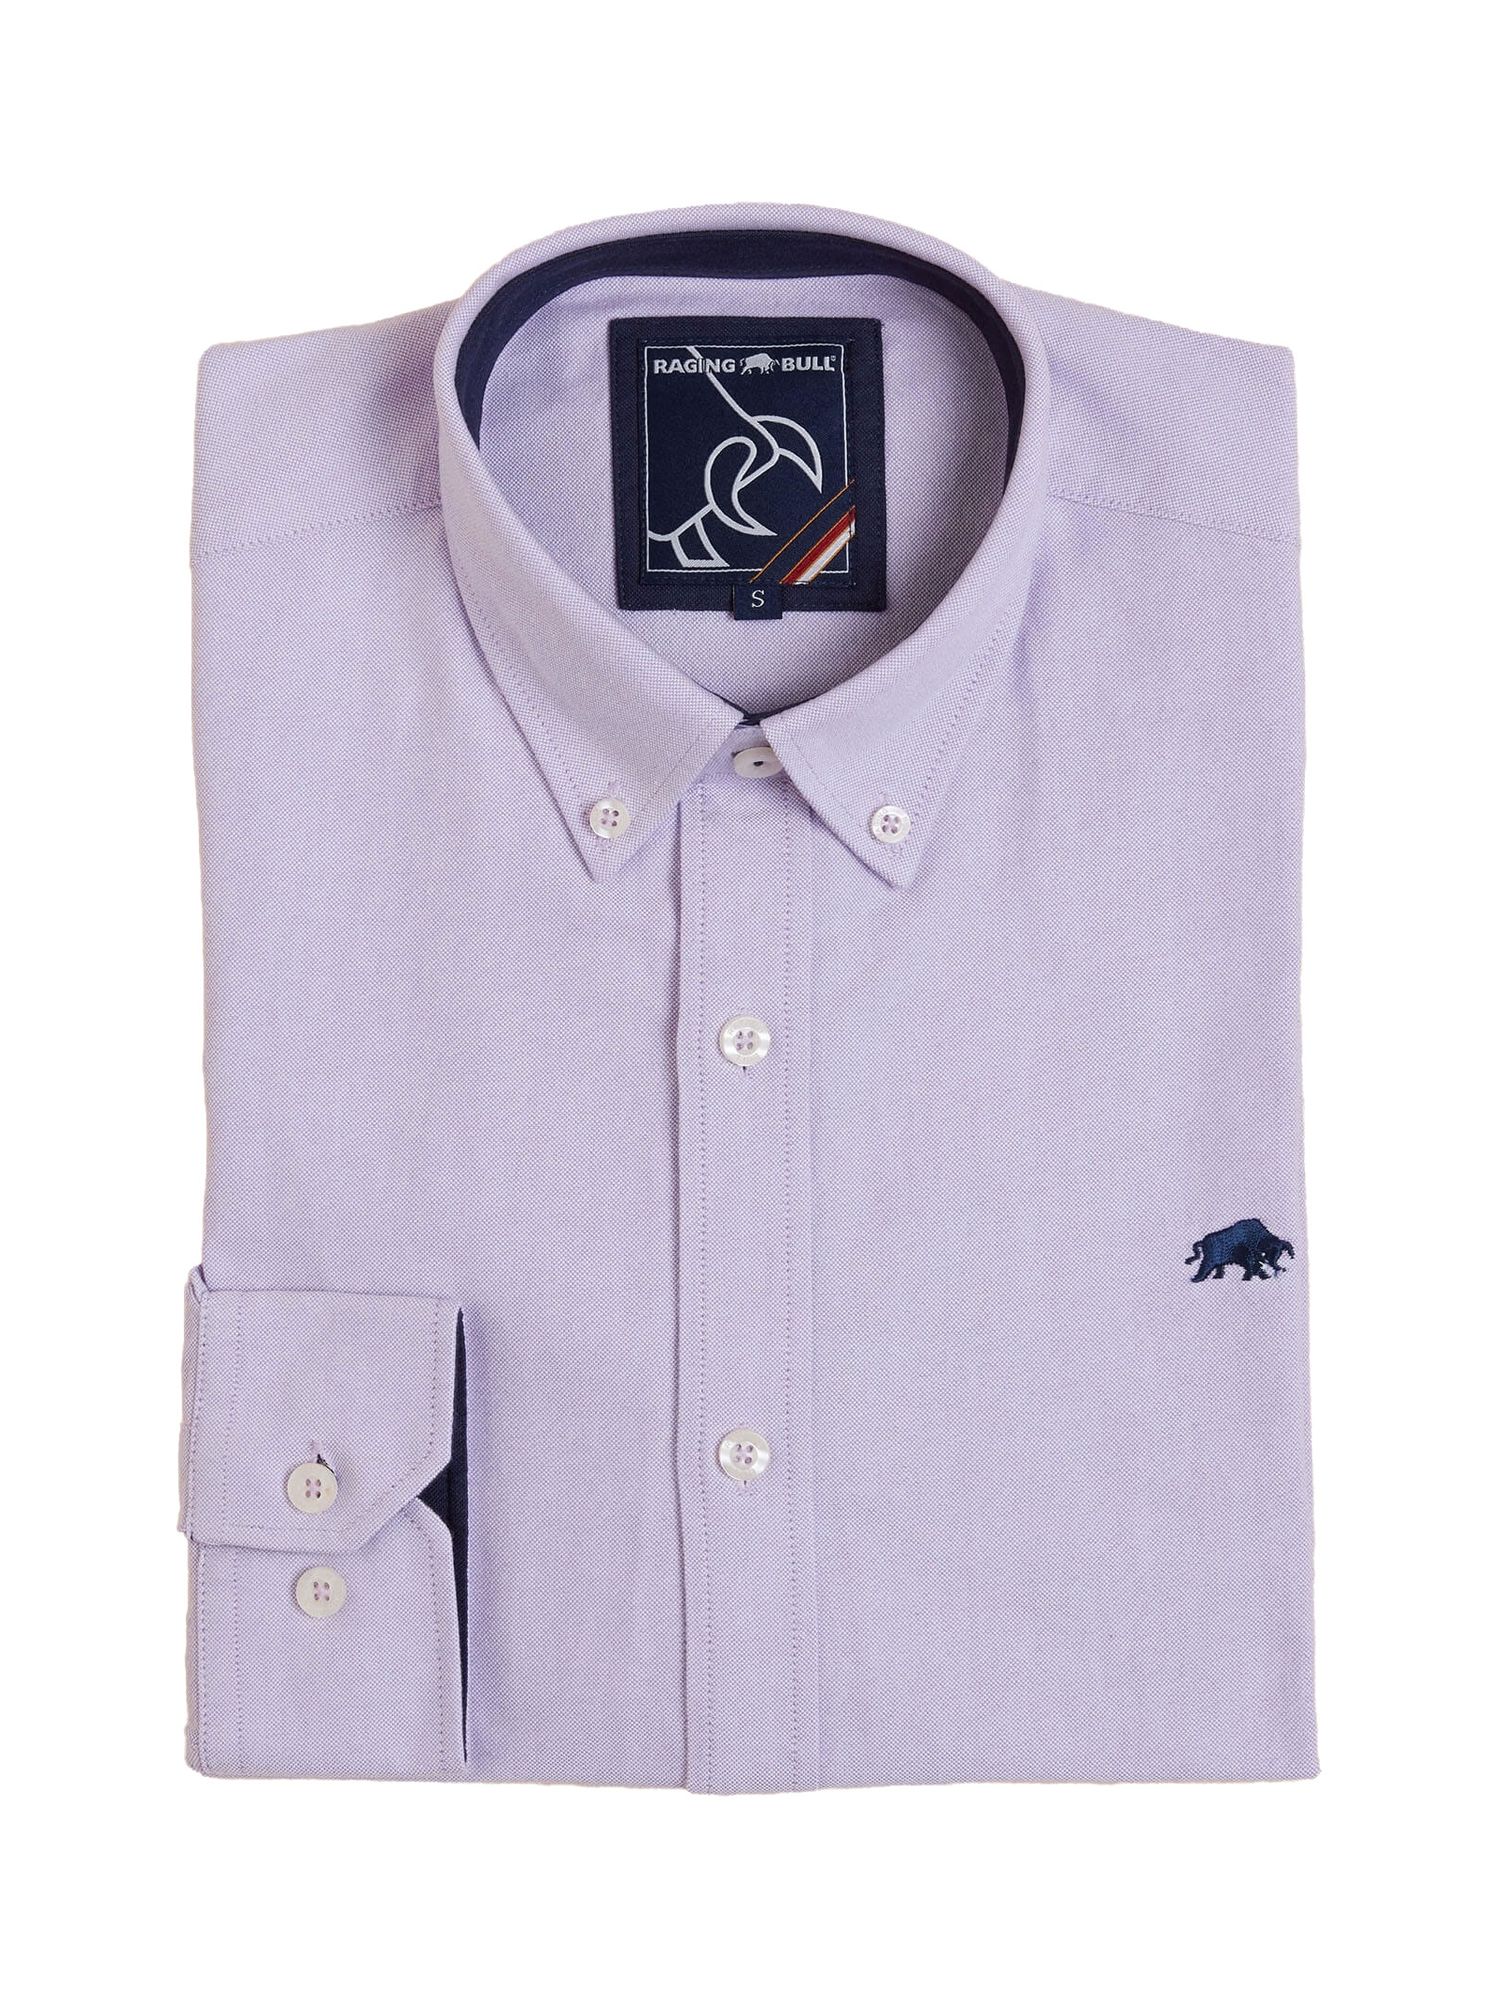 Raging Bull Classic Oxford Shirt, Purple, S